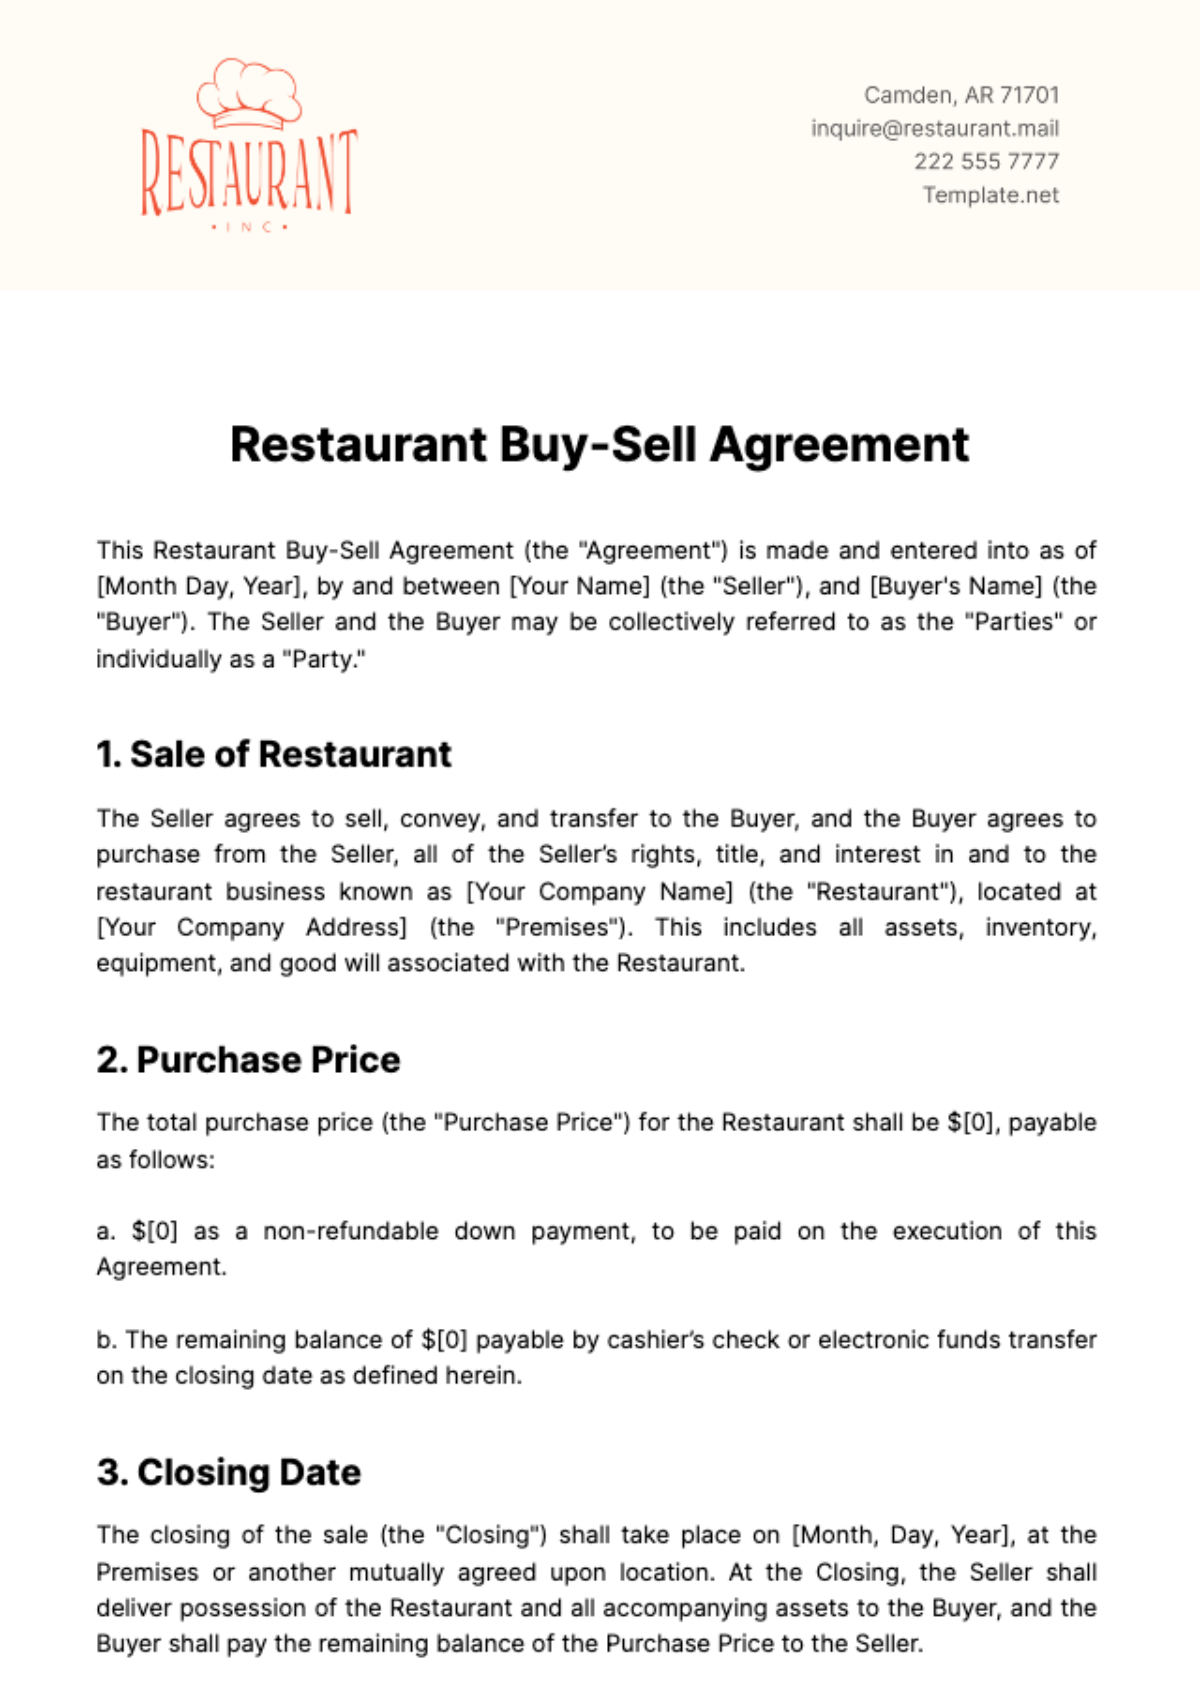 Restaurant Buy-Sell Agreement Template